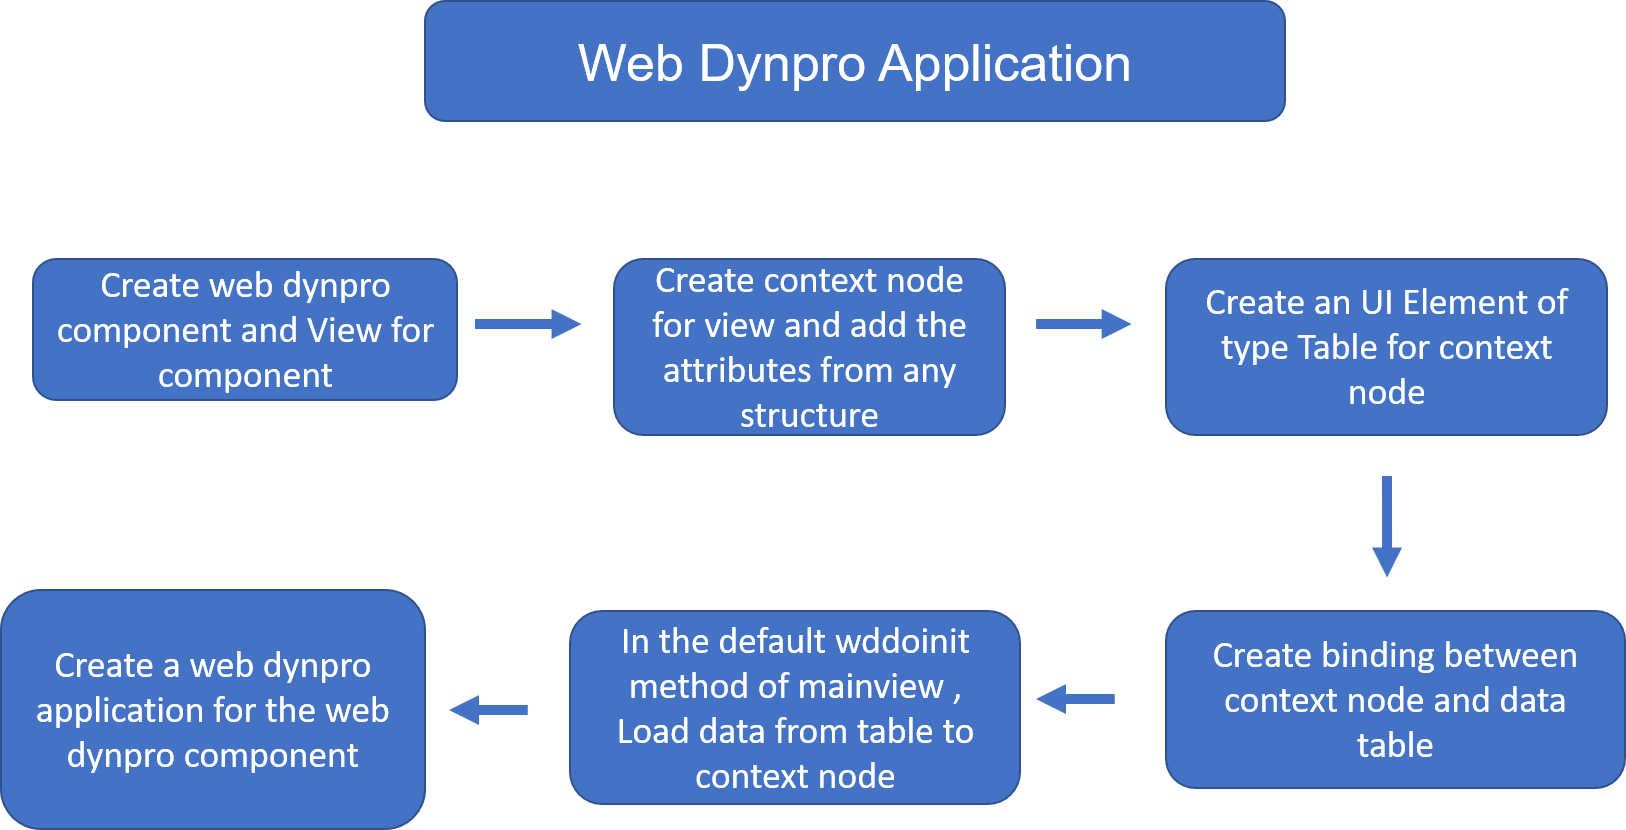 create a web dynpro application